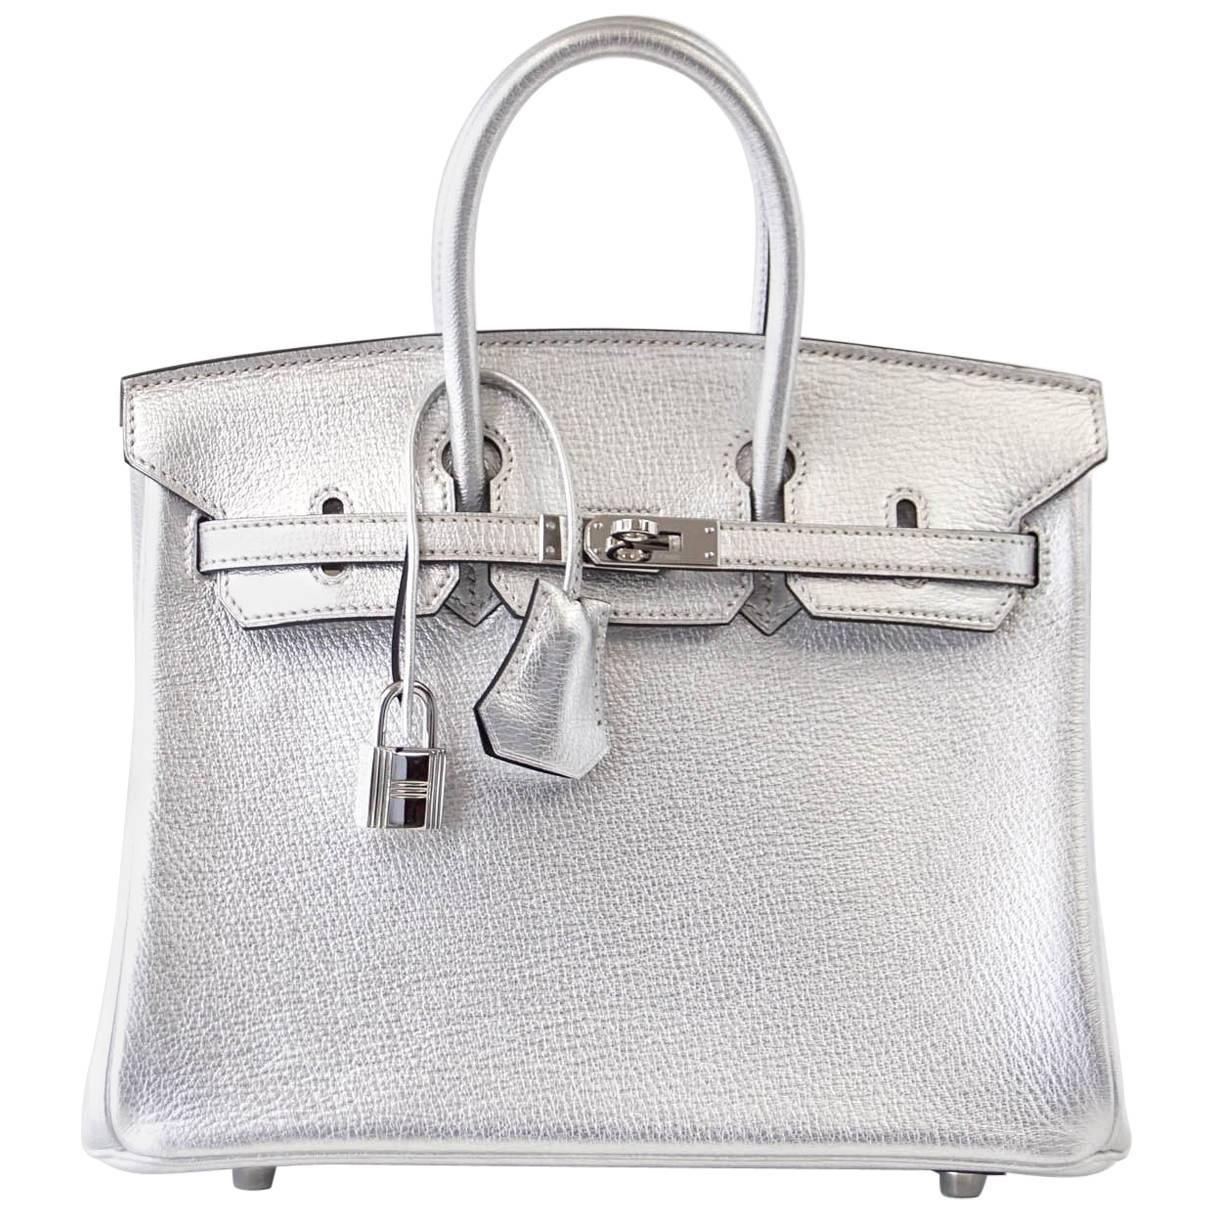 Sold at Auction: Hermes Birkin 25 Bag, Metallic Silver Chevre Leather,  Brushed Palladium Hardware